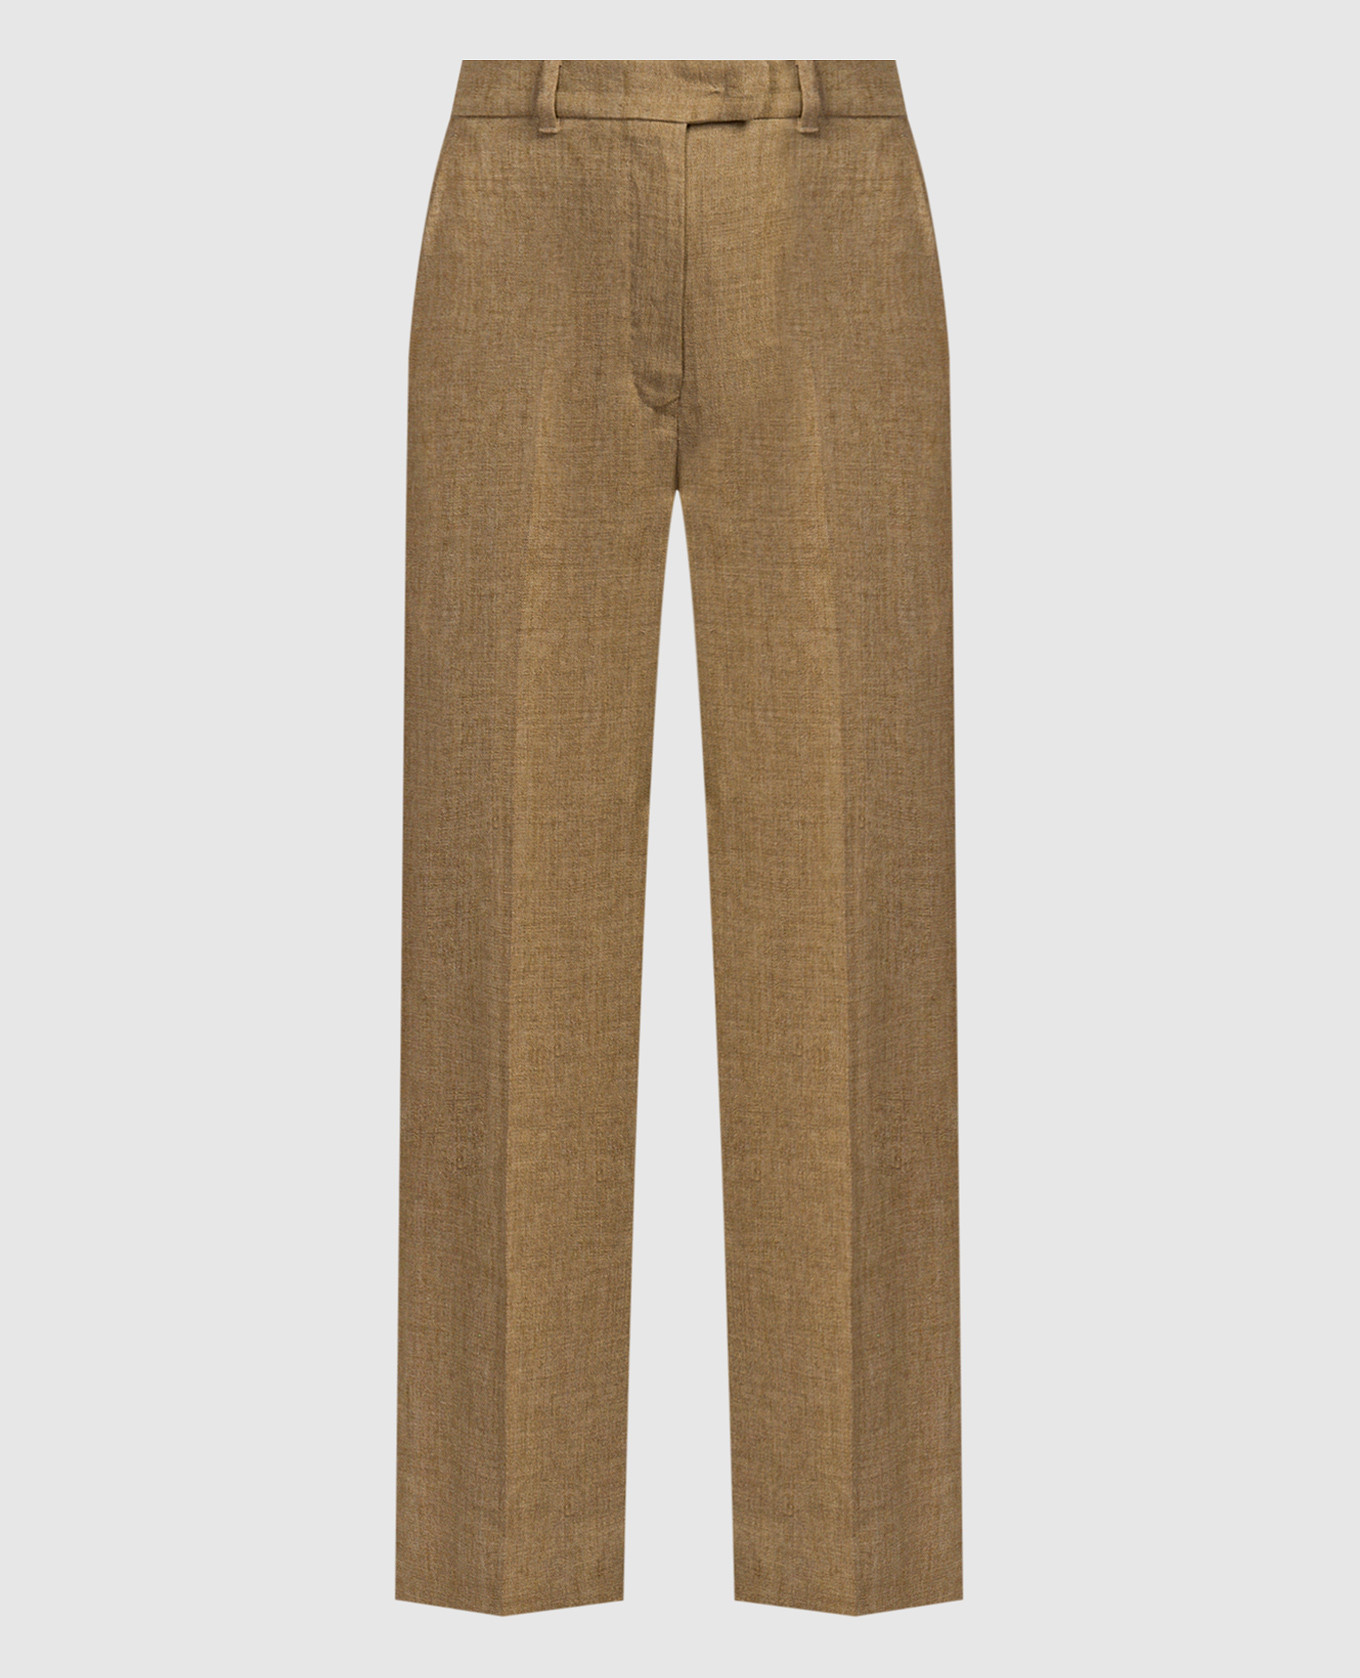 Коричневые брюки ALCANO из льна.